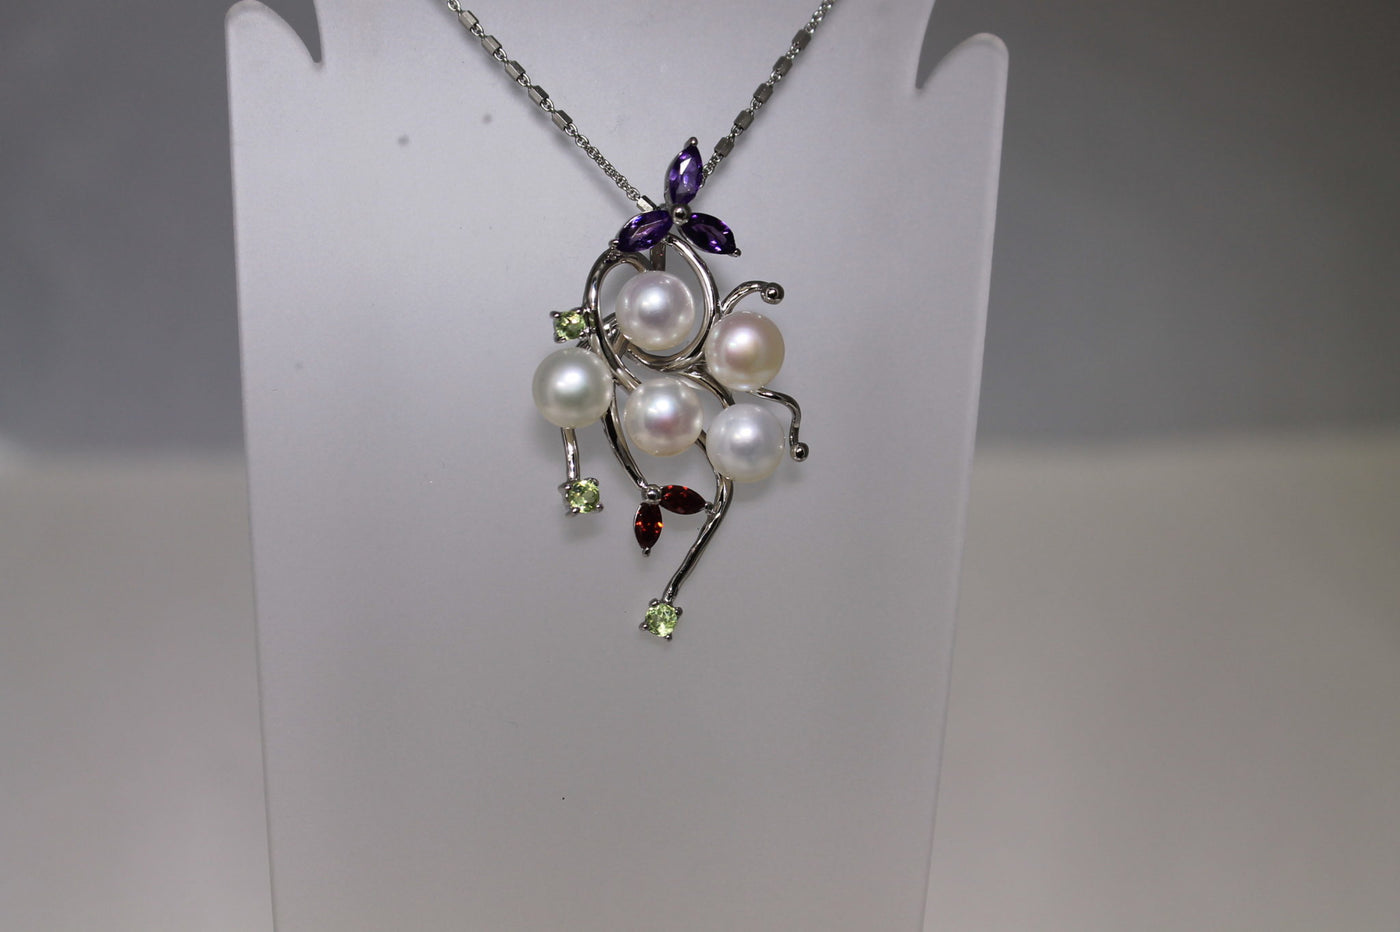 Genuine Pearl Pendant set in Sterling Silver